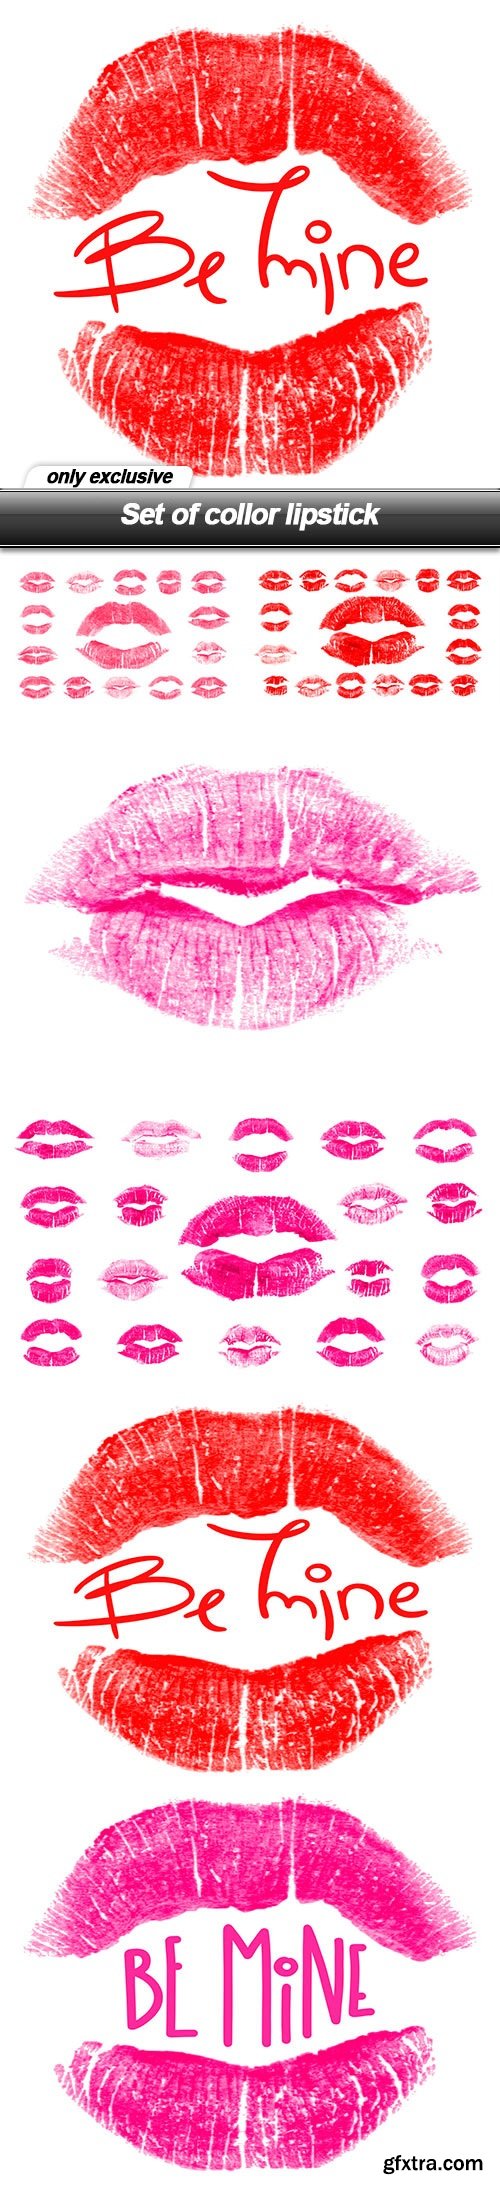 Set of collor lipstick - 6 UHQ JPEG